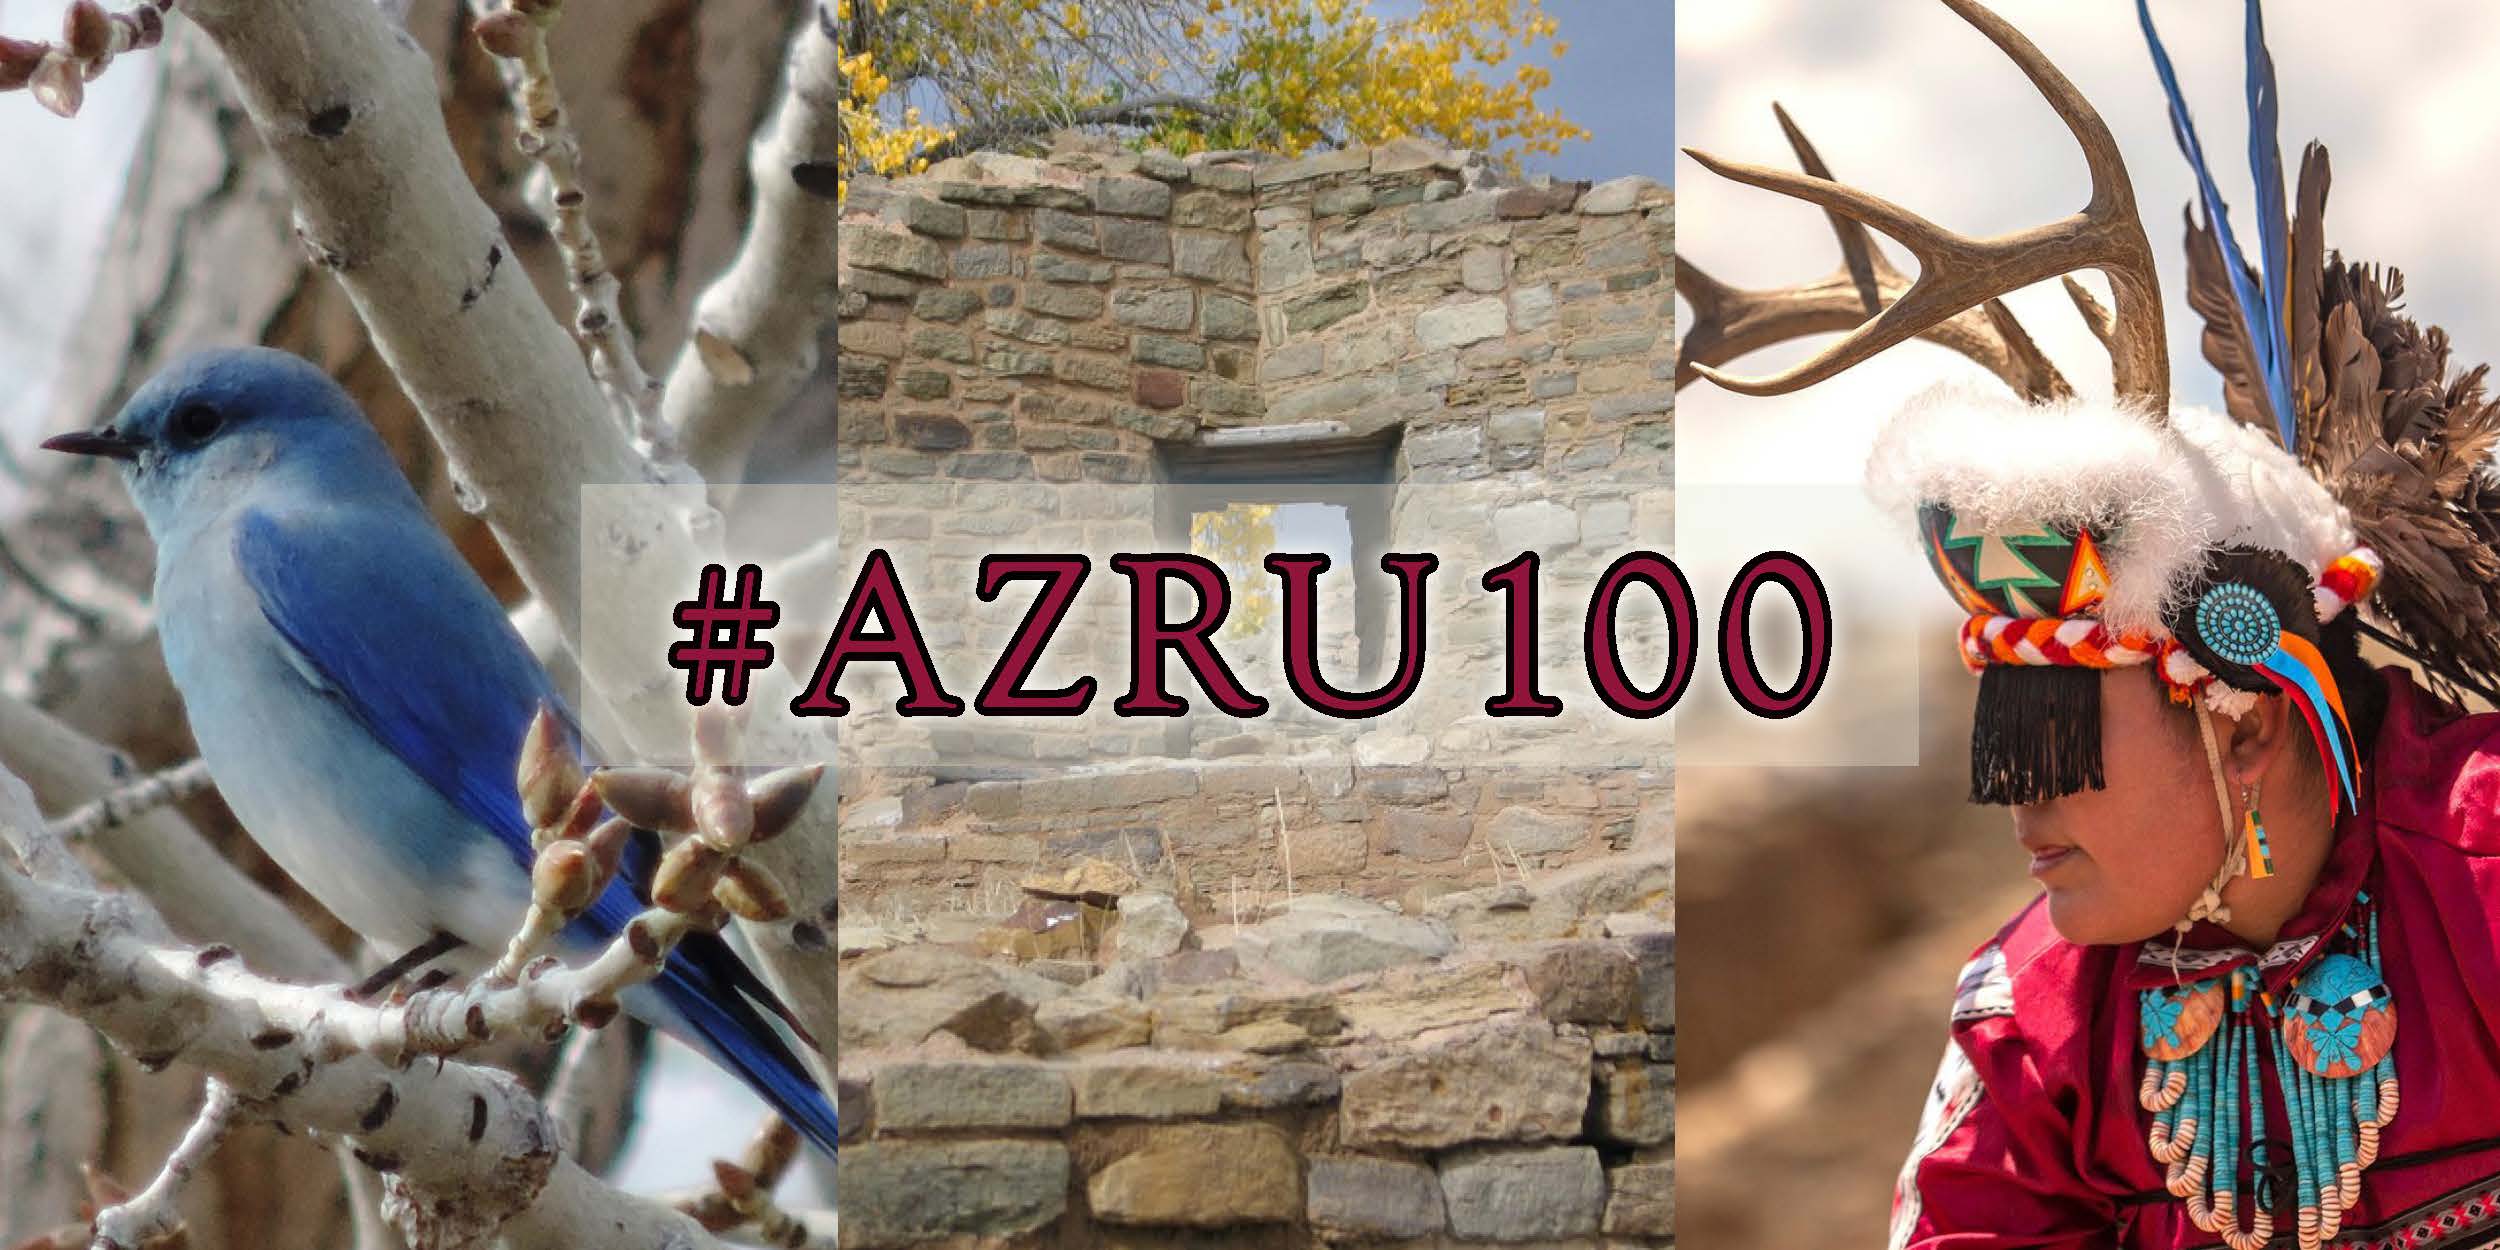 A mountain bluebird, a corner door, and a Pueblo dancer in a collage behind #AZRU100